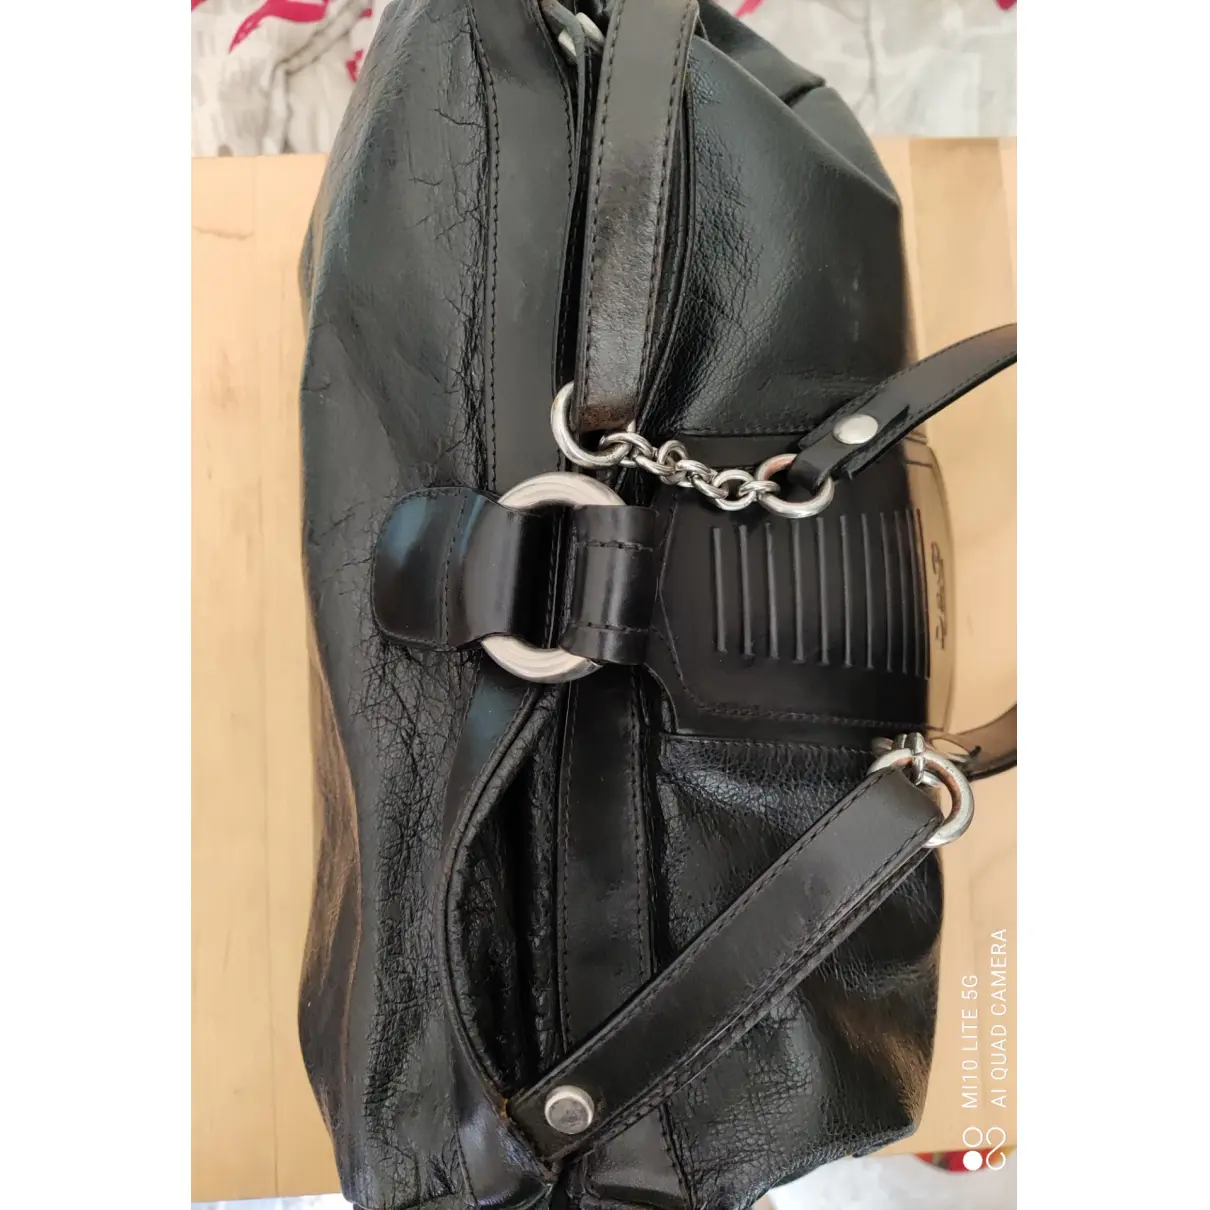 Leather handbag D&G